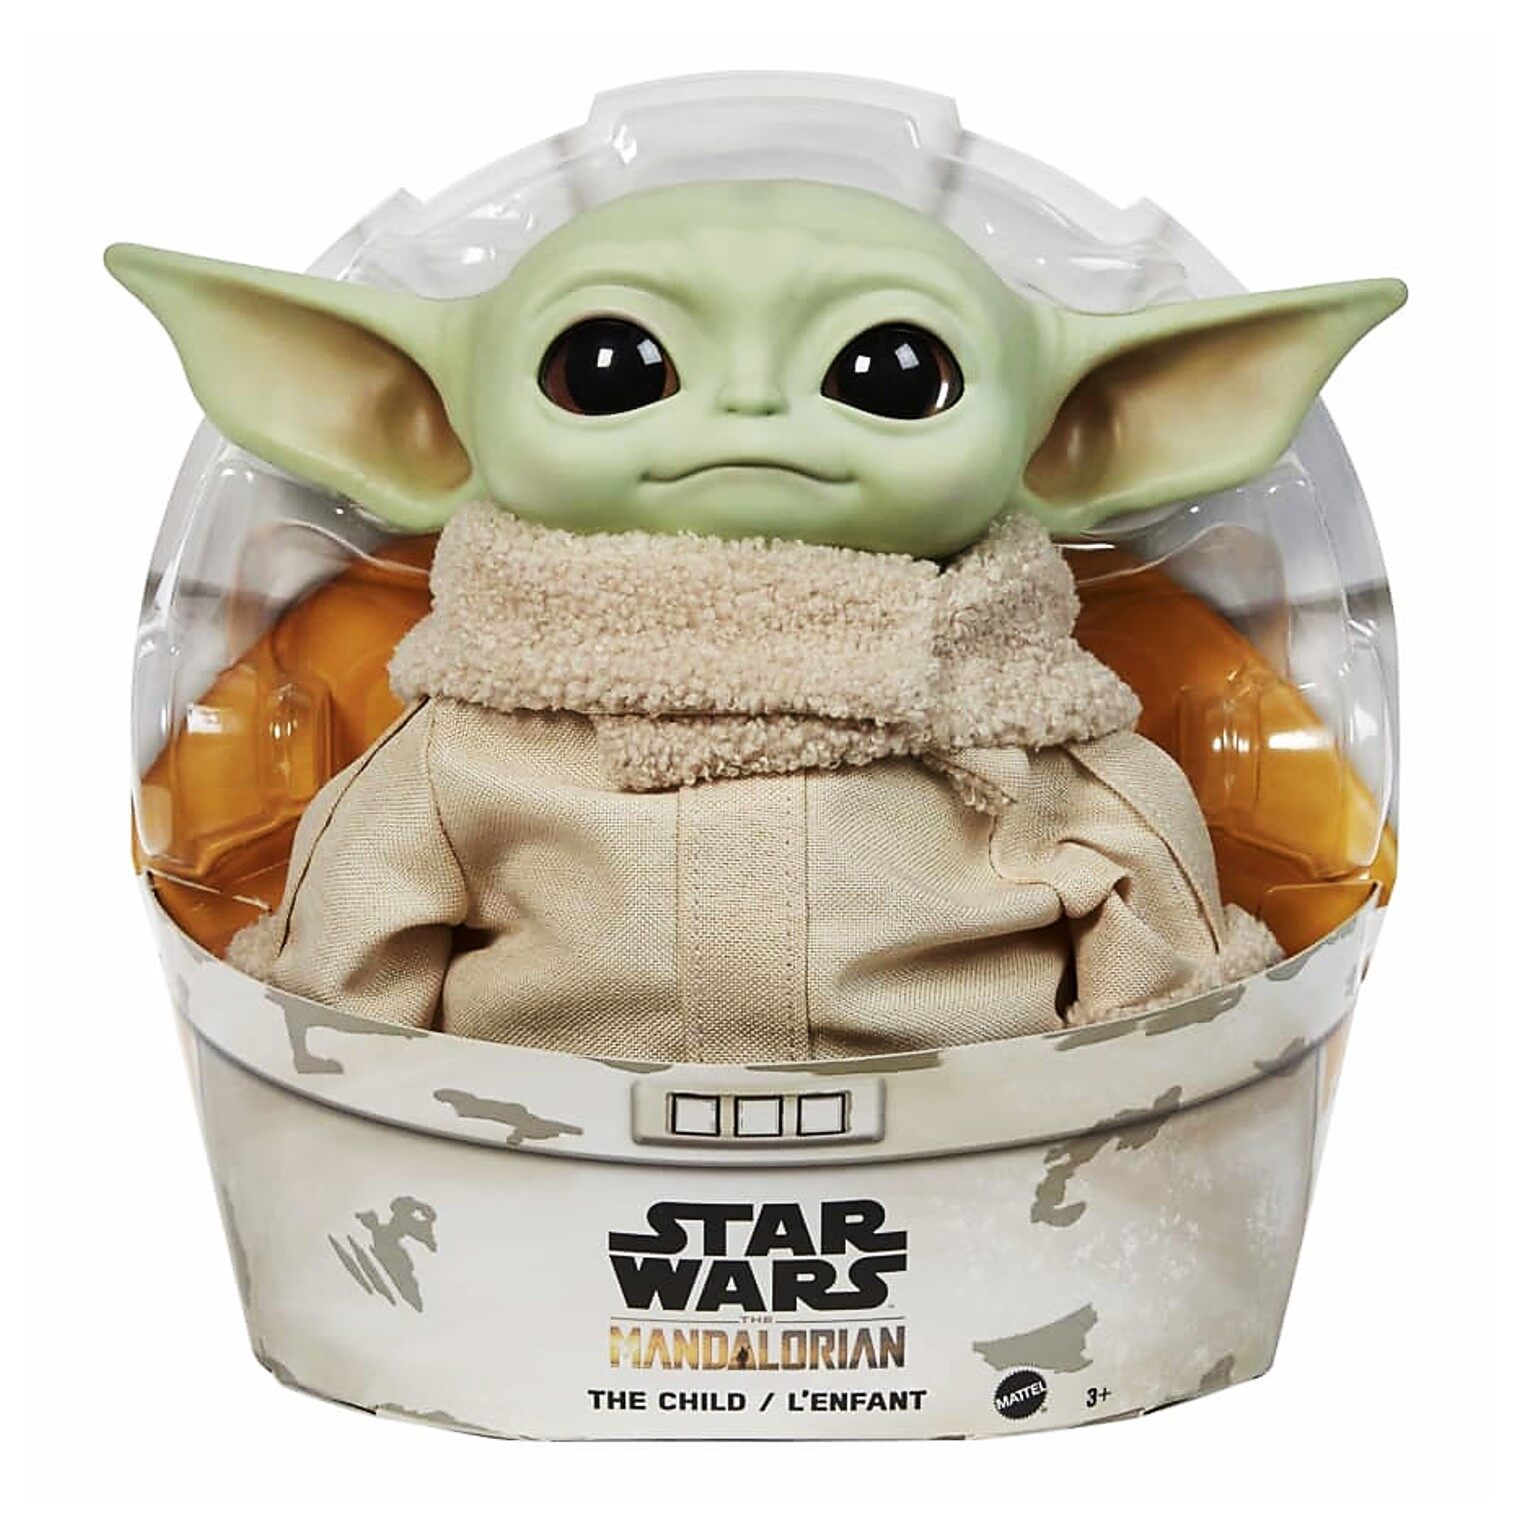 Star Wars The Mandalorian Baby Yoda Grogu The Child Plush Figure Doll